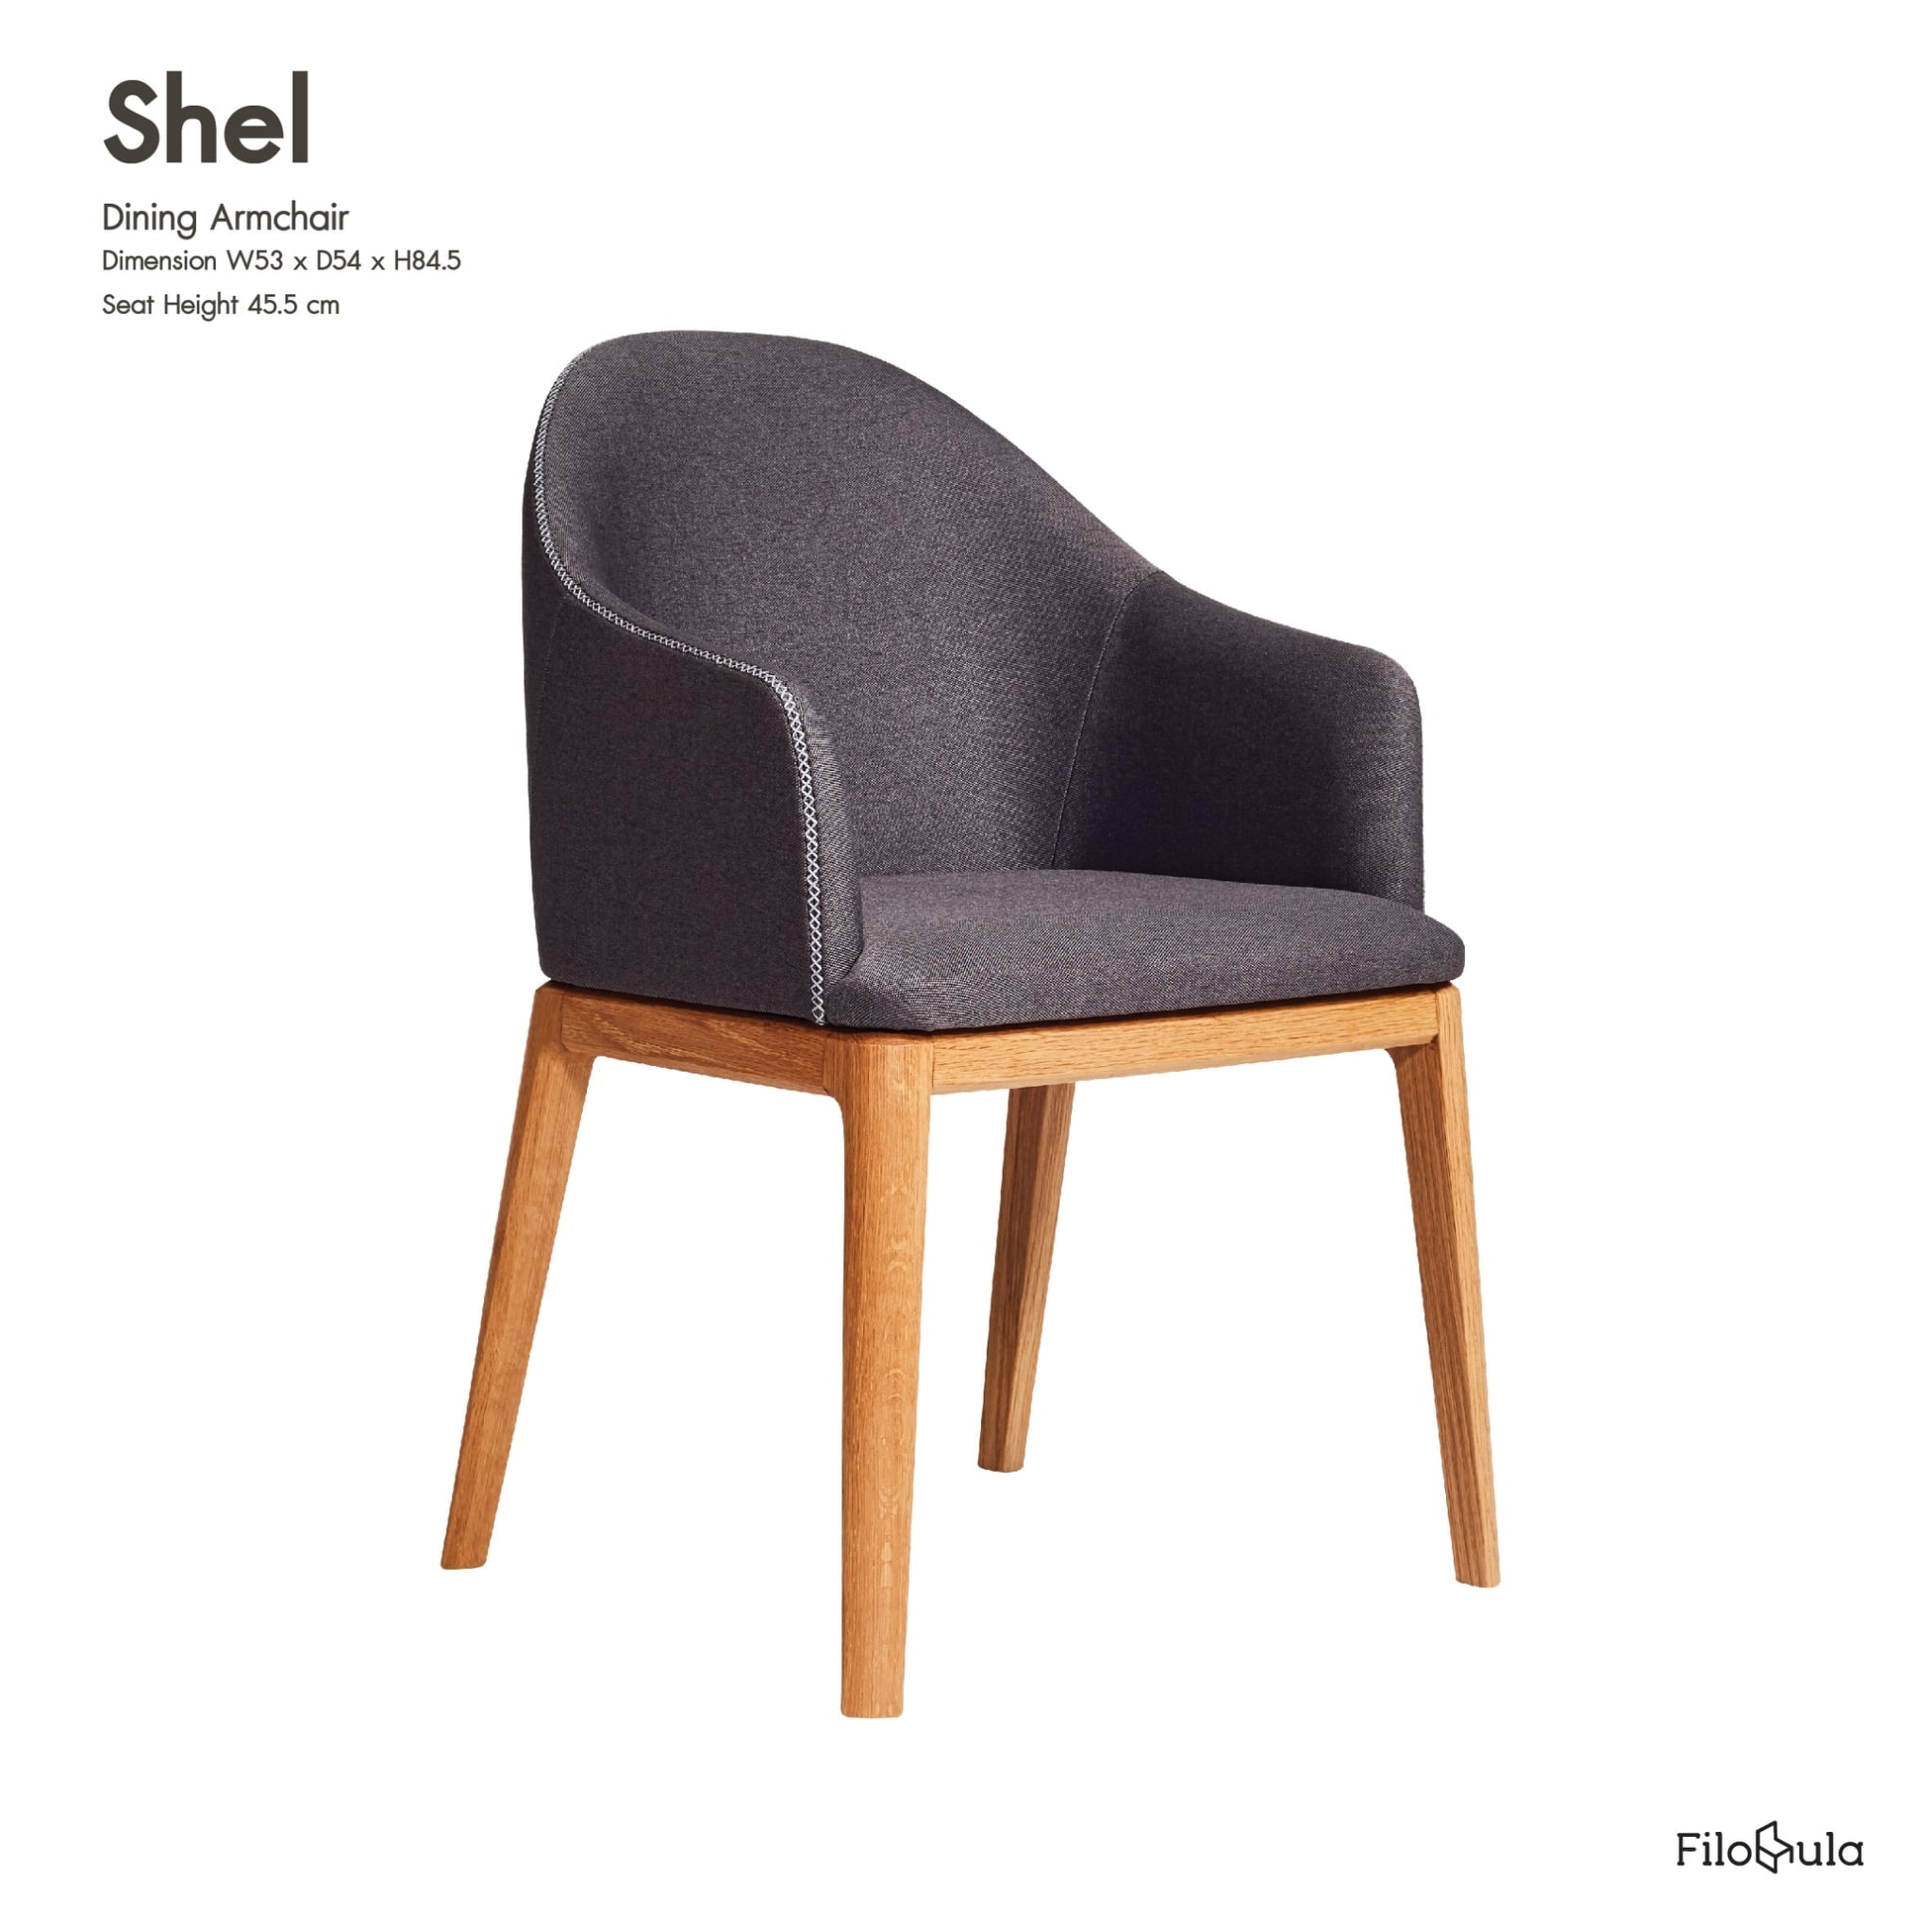 Filobula - Shel Dining Armchair